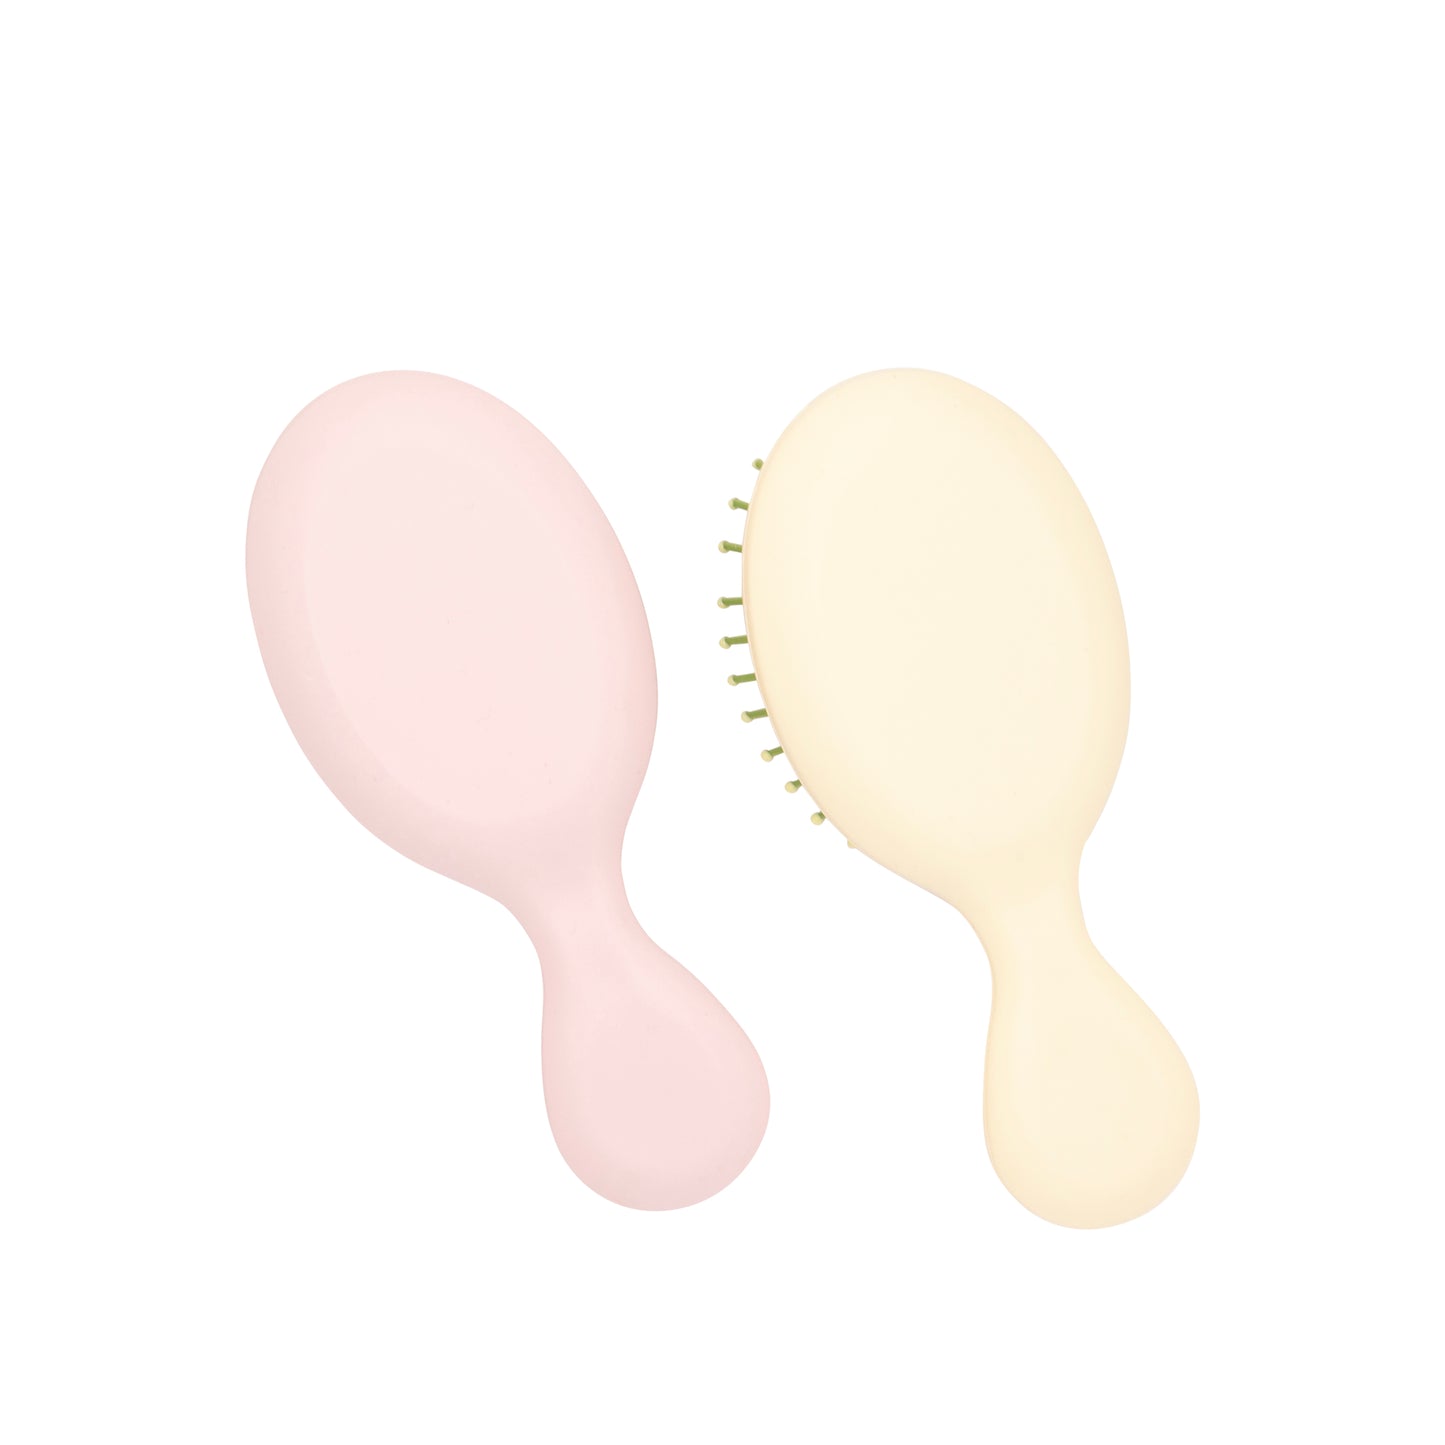 Cream Glue Project: Hair Comb/Brush